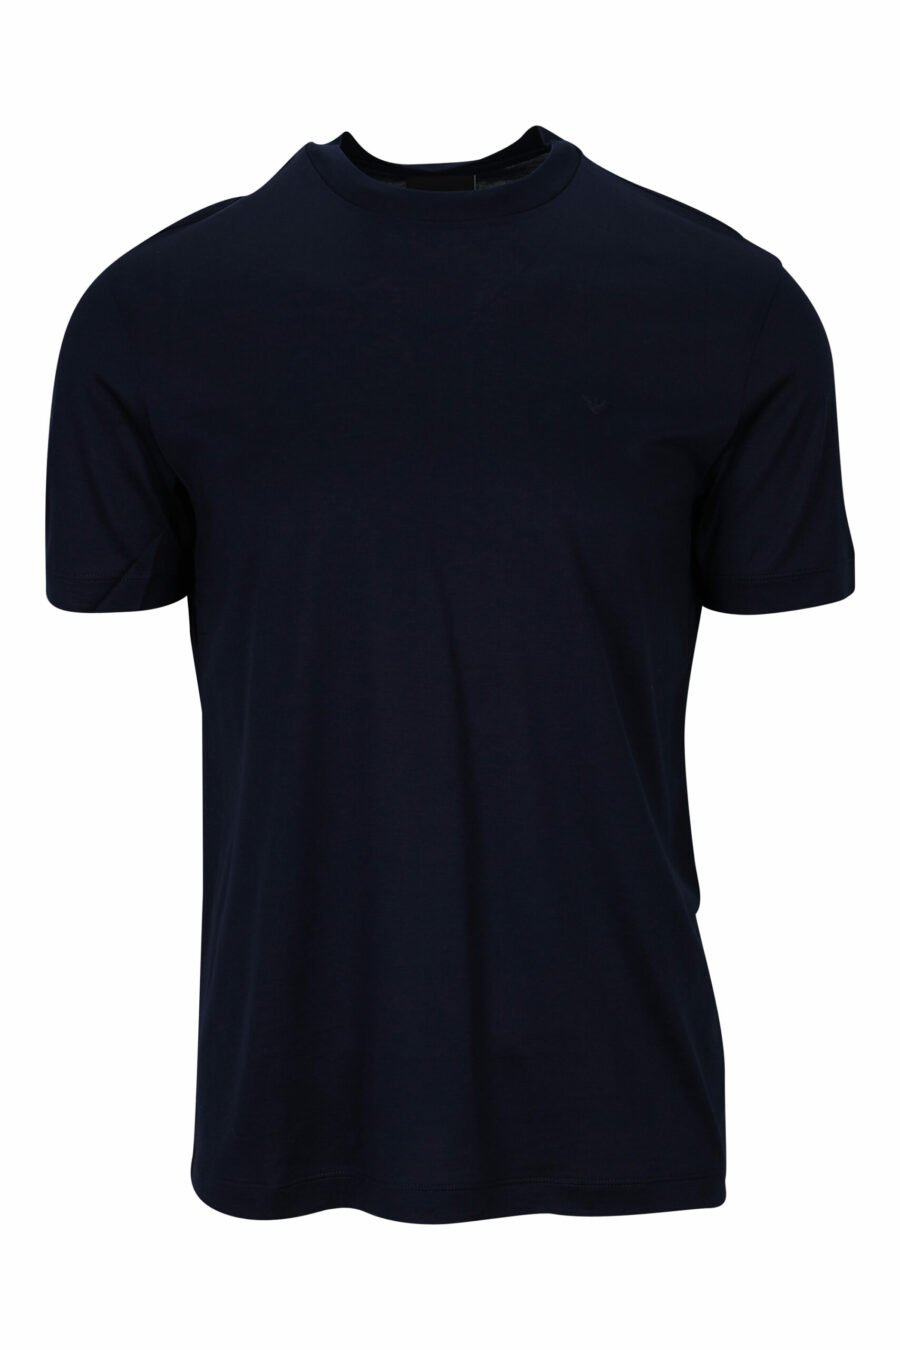 Marineblaues T-Shirt mit Mini-Adler-Logo - 8057767732455 skaliert